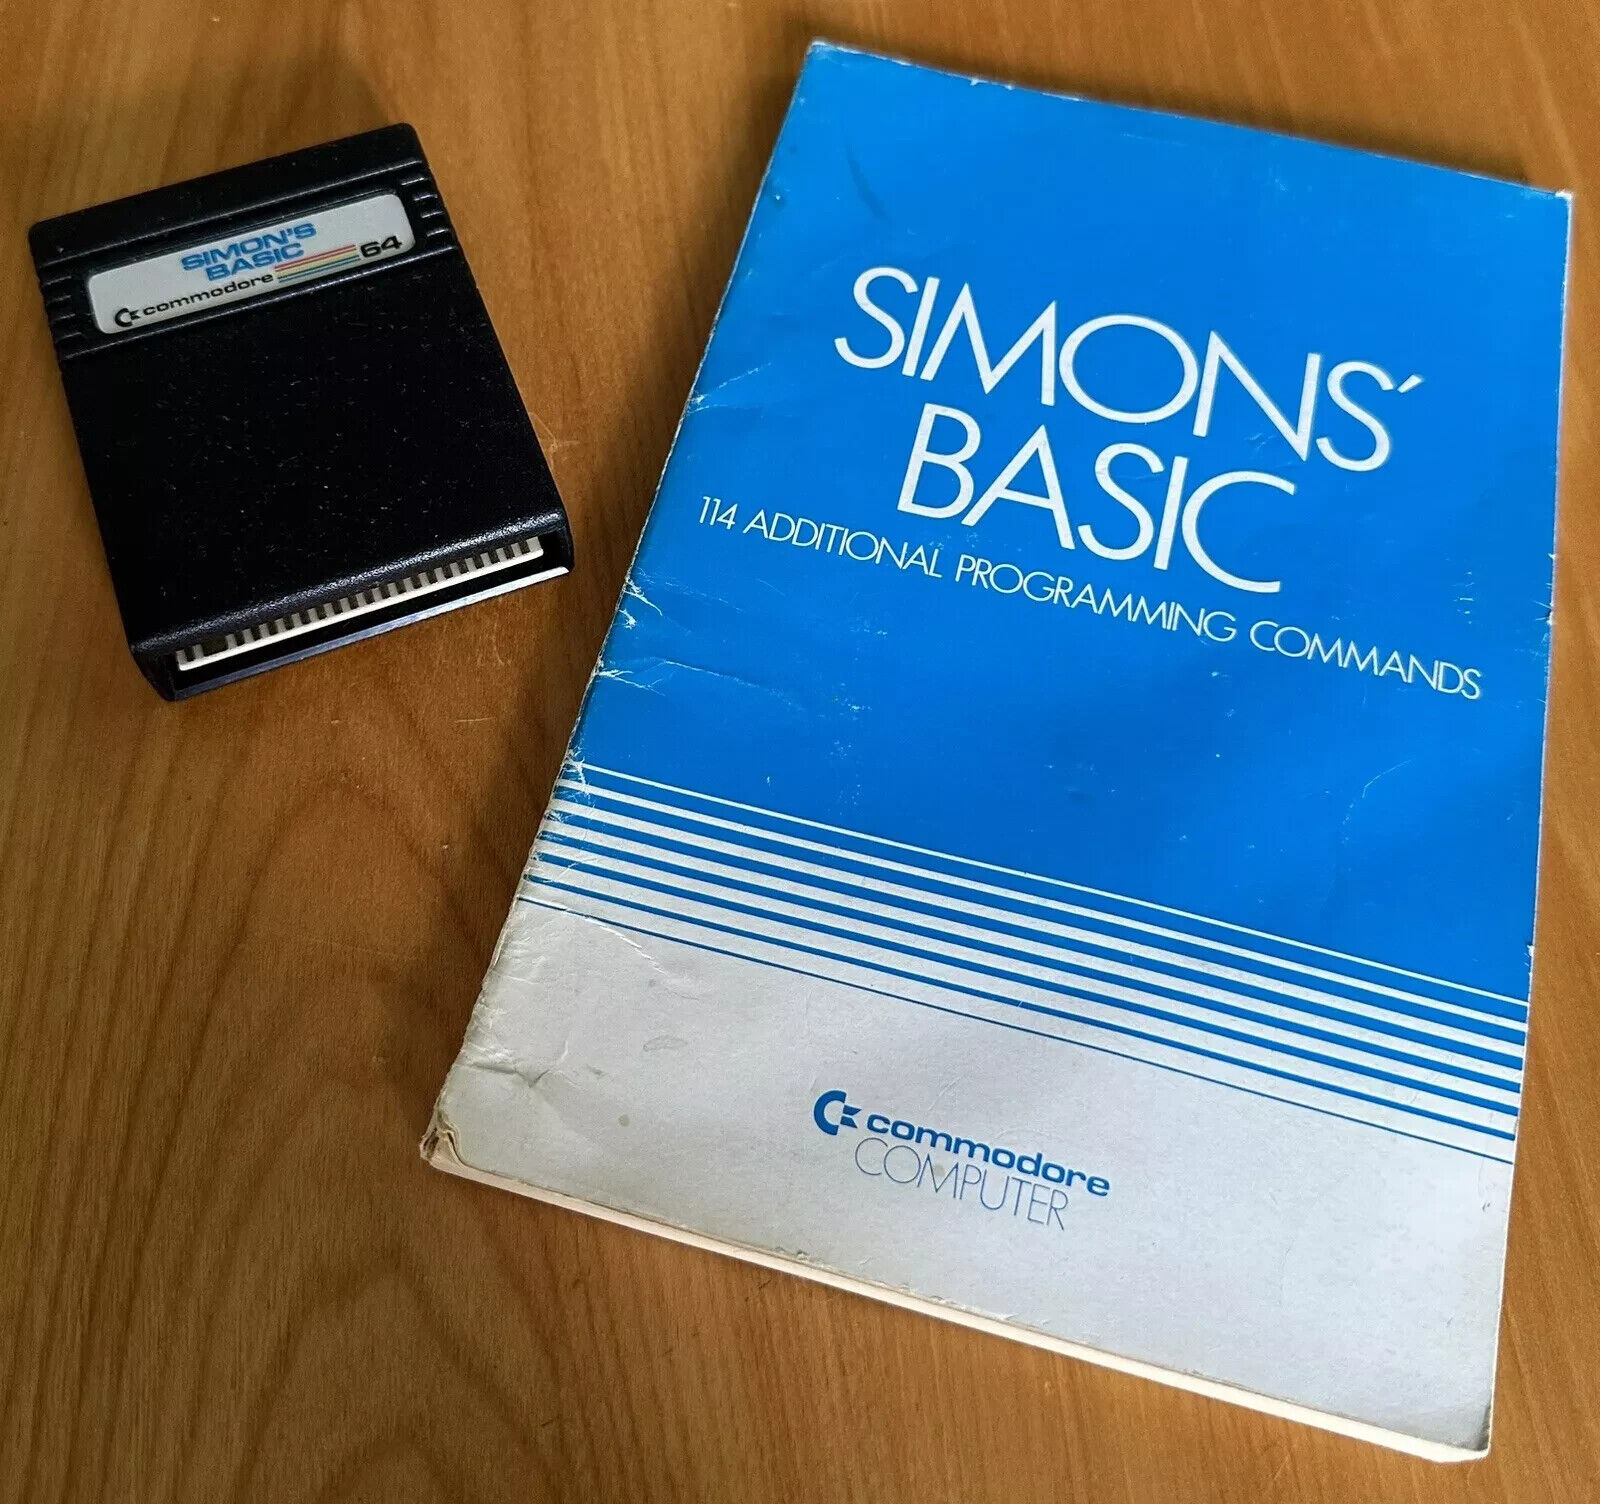 1983 Commodore 64 Simon's Basic Cartridge 114 Programming Commands w/ Manual